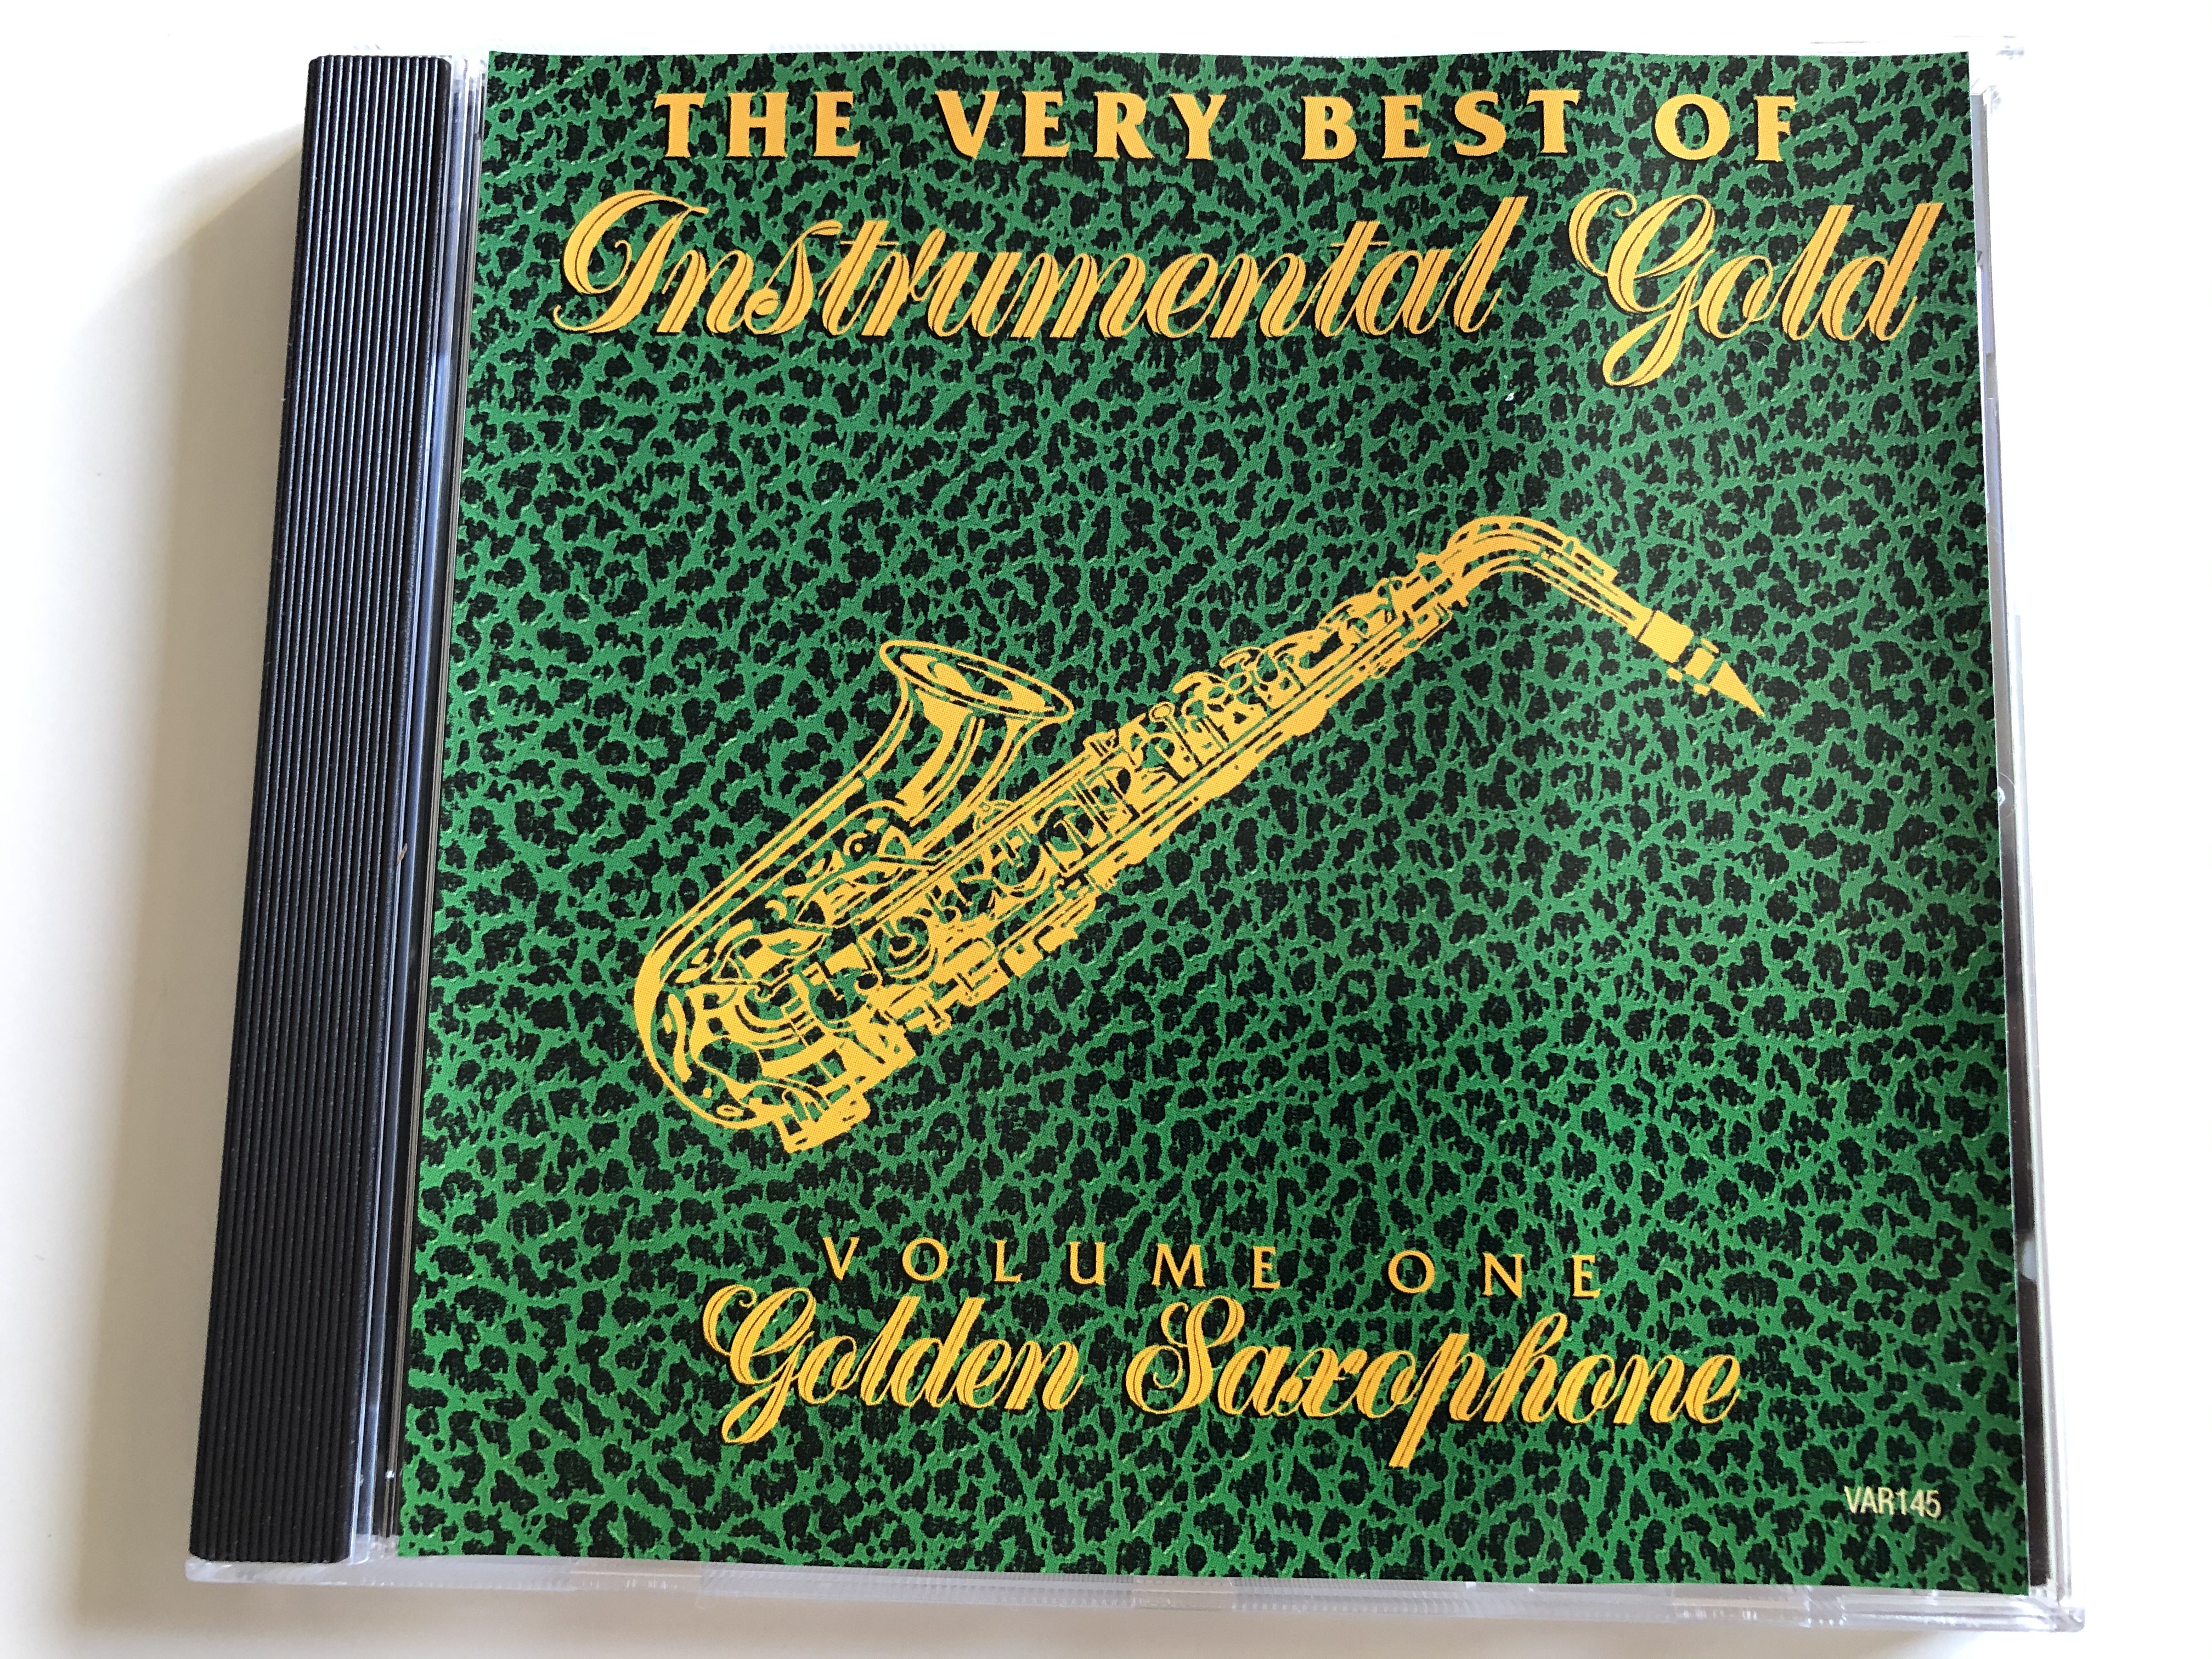 the-very-best-of-instrumental-gold-volume-one-golden-saxophone-tring-audio-cd-var145-1-.jpg